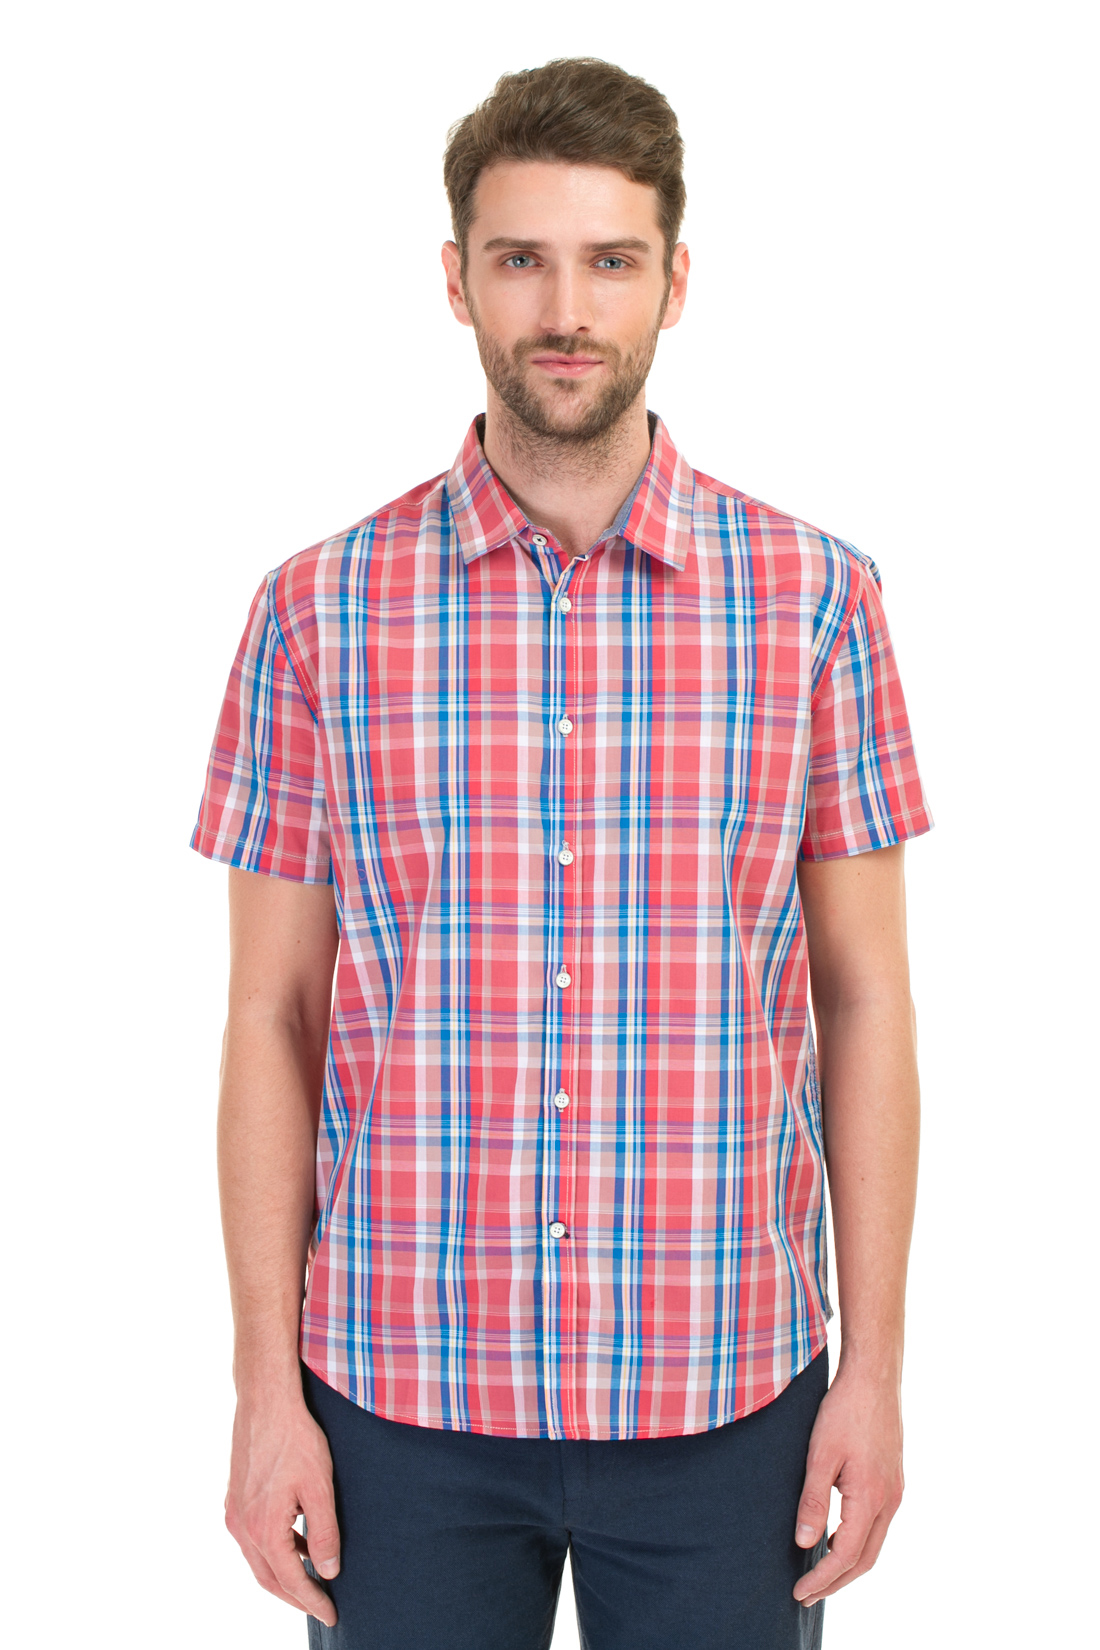 Рубашка в яркую клетку (арт. baon B687008), размер S, цвет розовый Рубашка в яркую клетку (арт. baon B687008) - фото 1